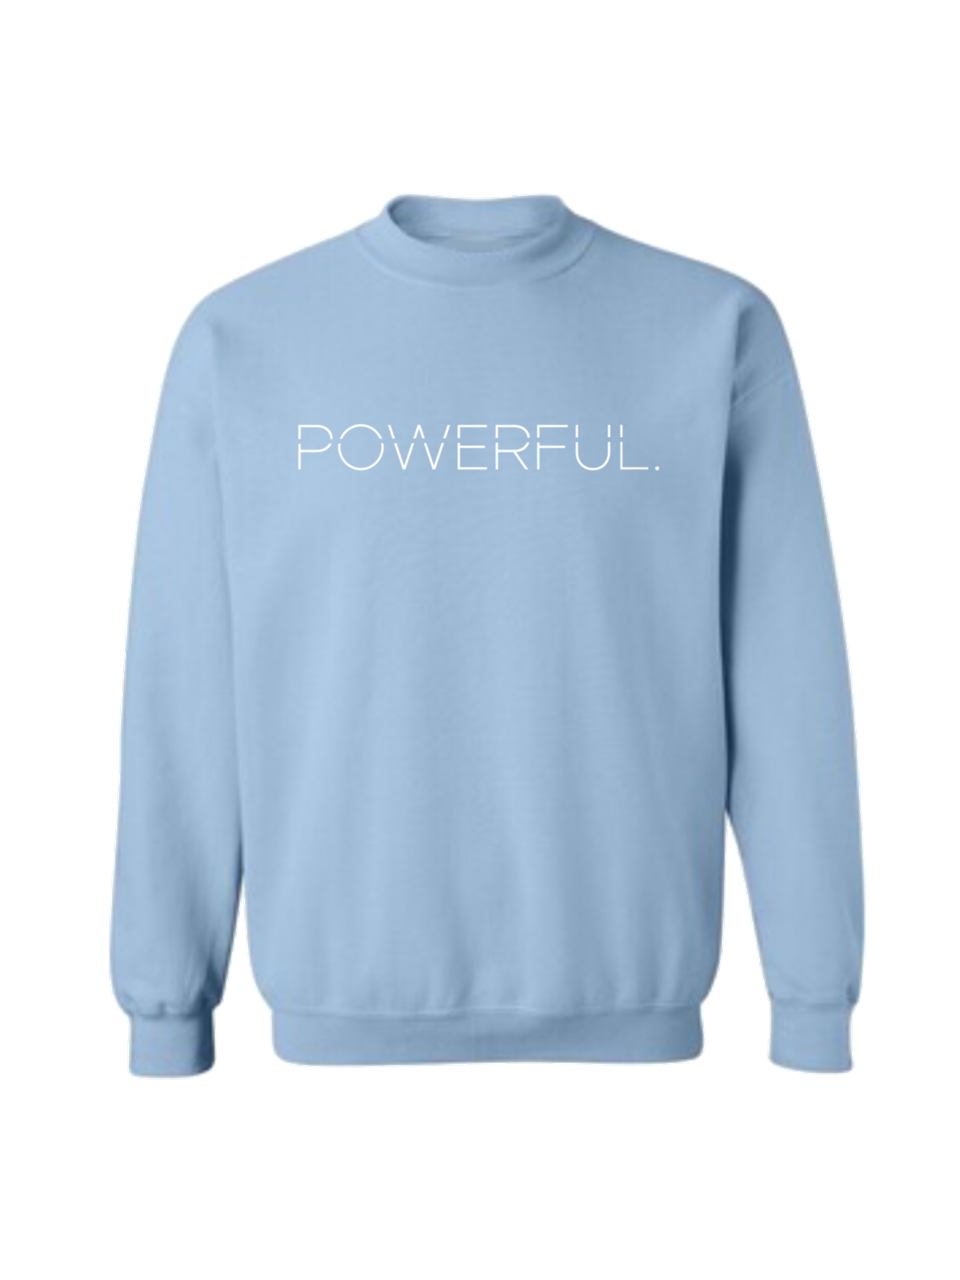 Light Blue Powerful.Creative Logo Sweatshirt